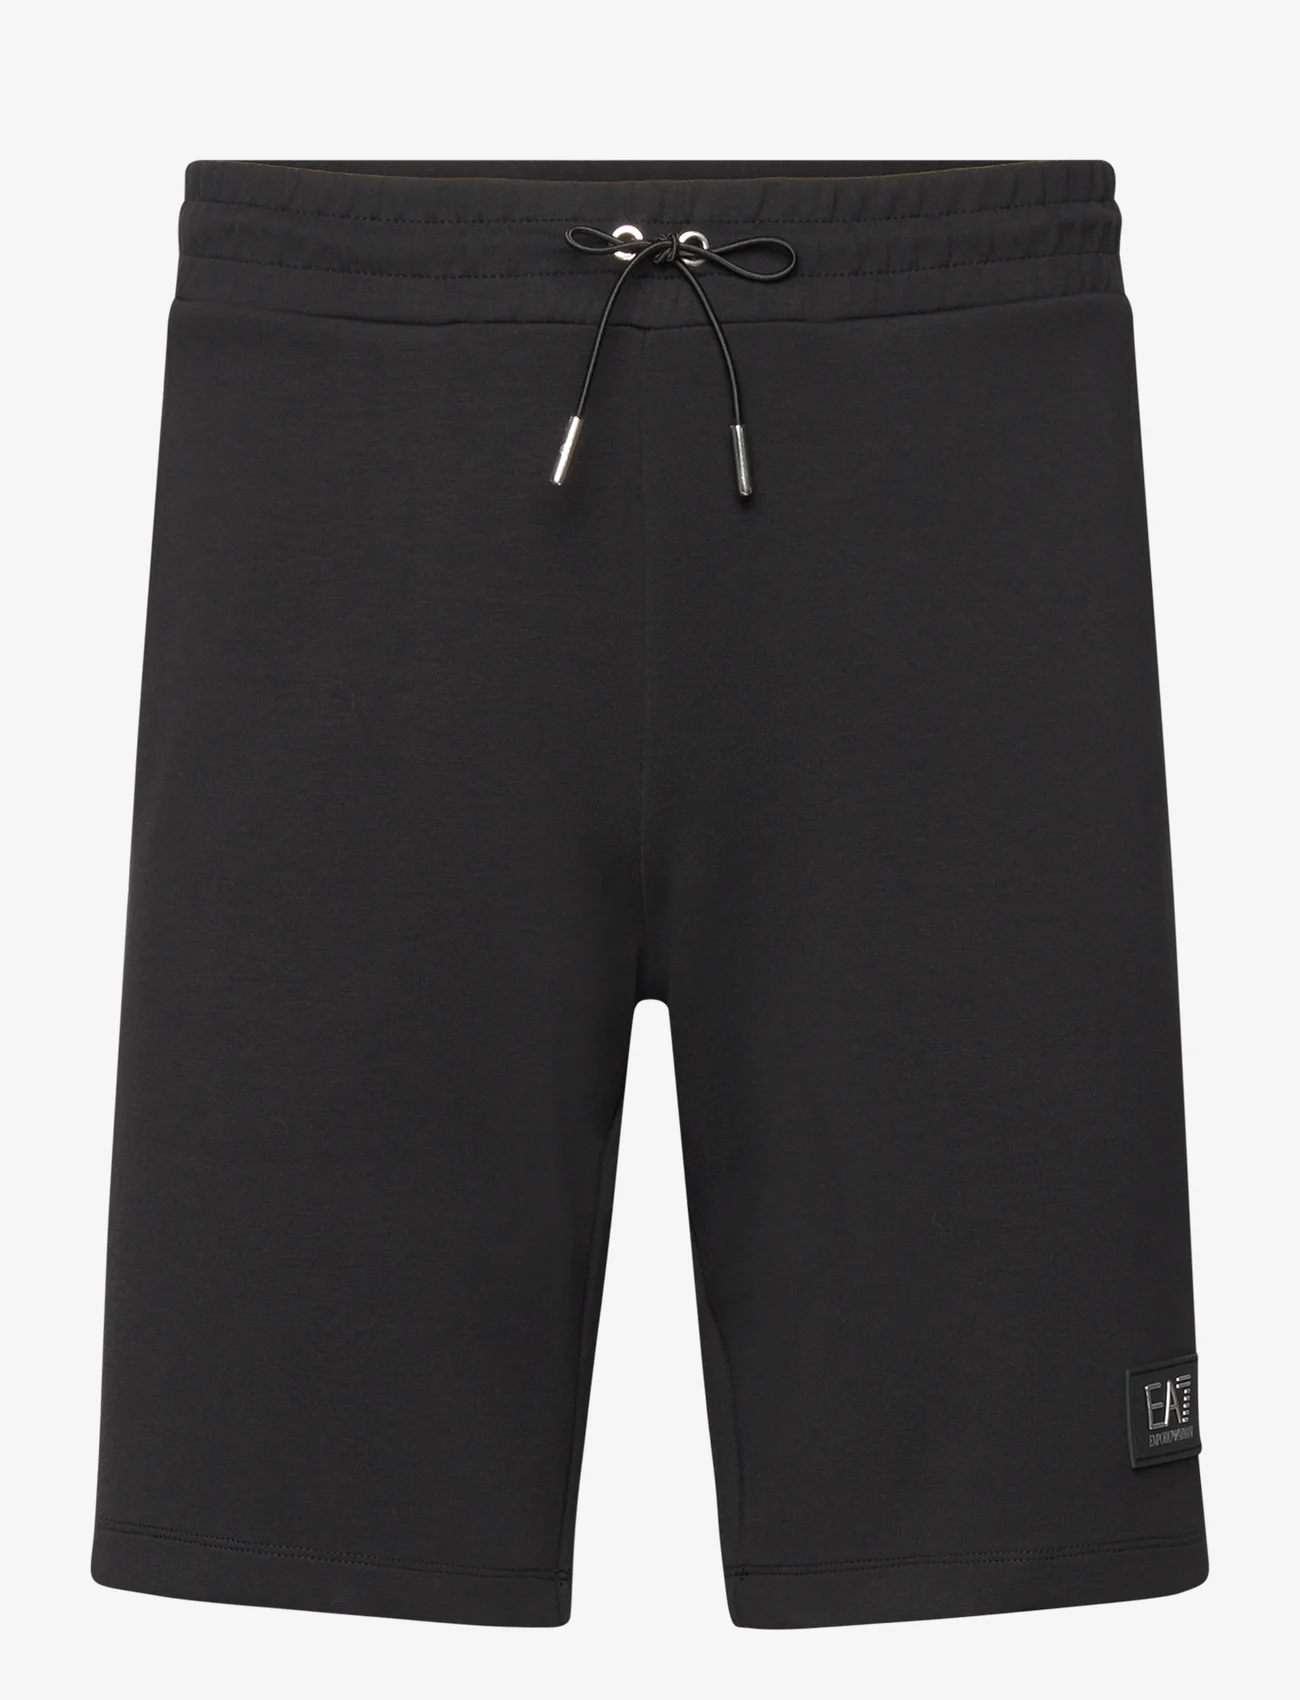 EA7 - BERMUDA - sports shorts - black - 0